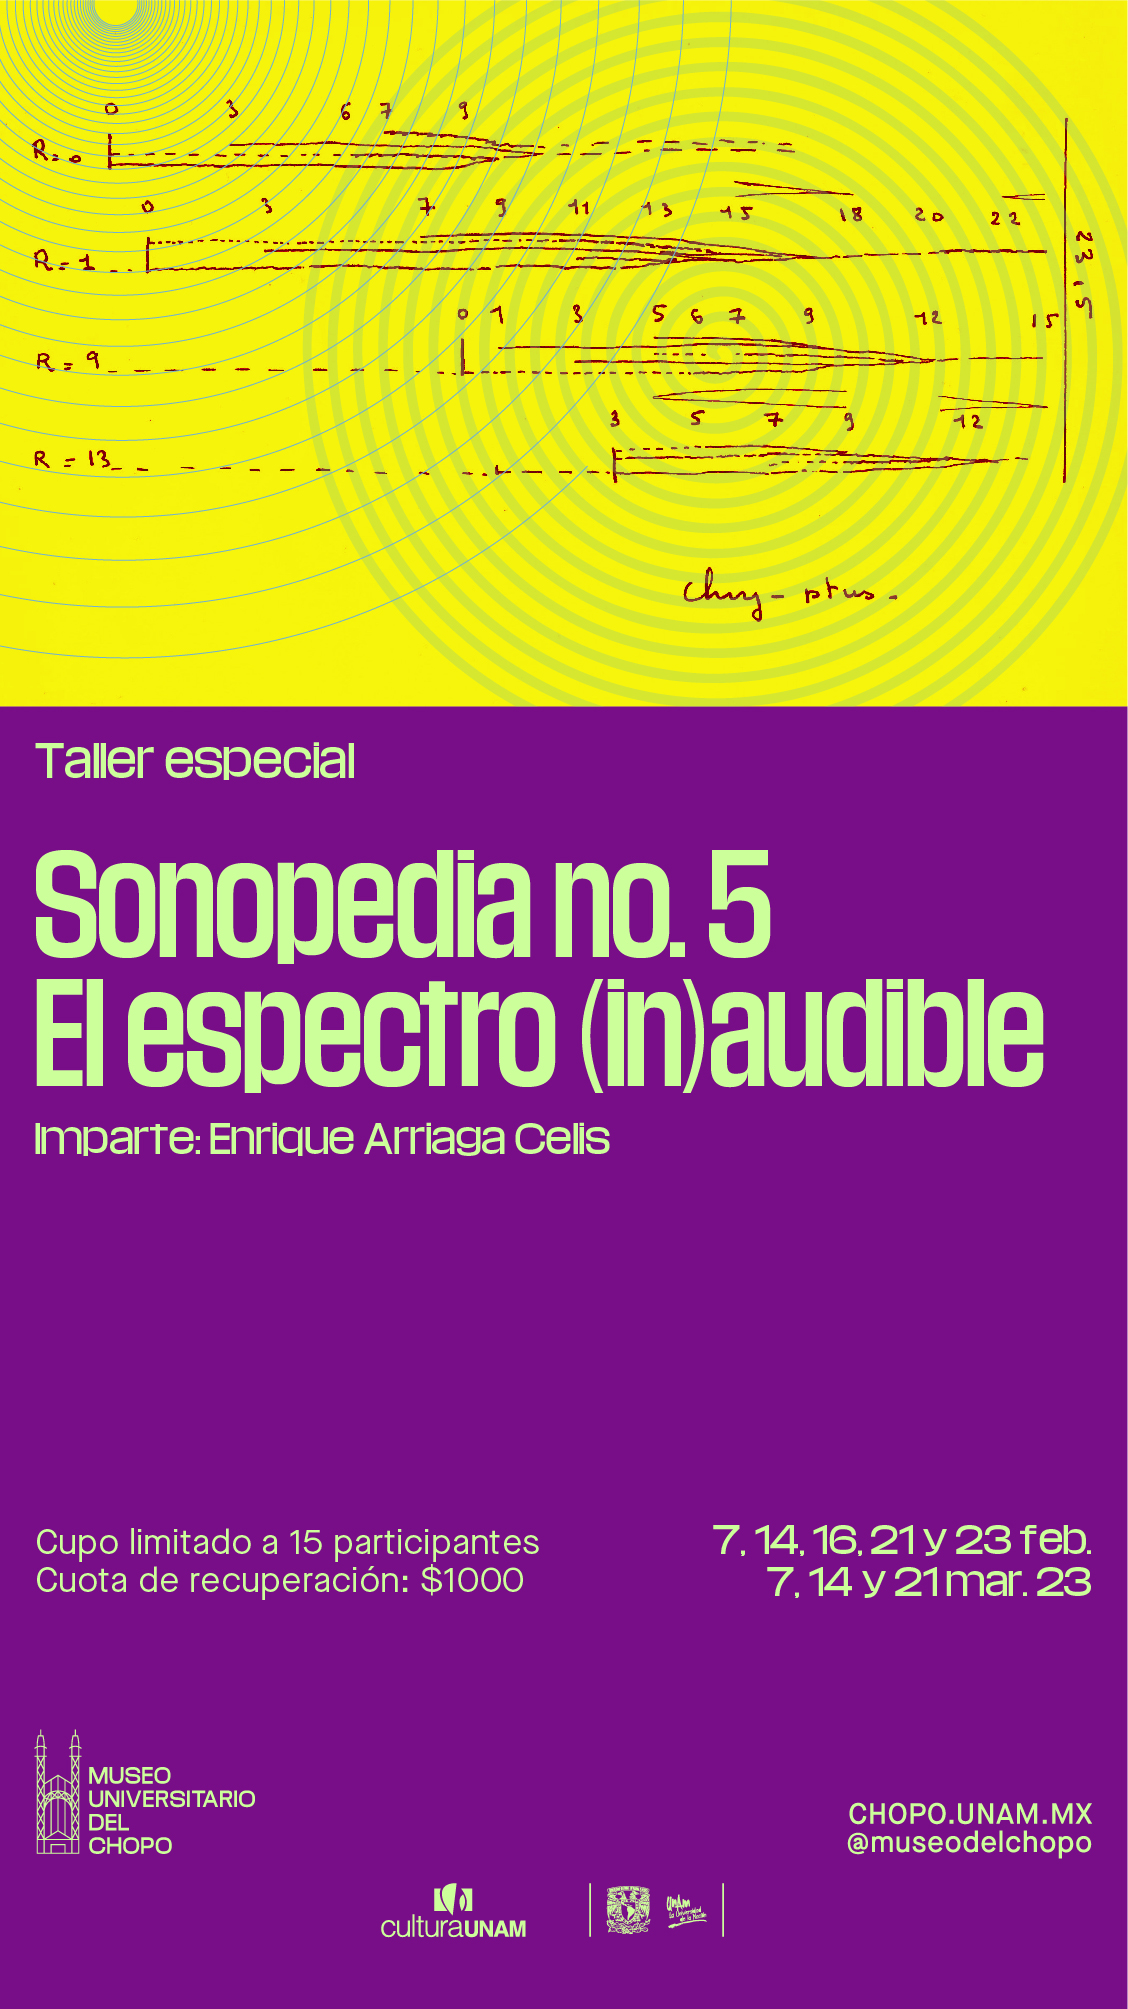 REDES-ESPECTRO-INAUDIBLE-05